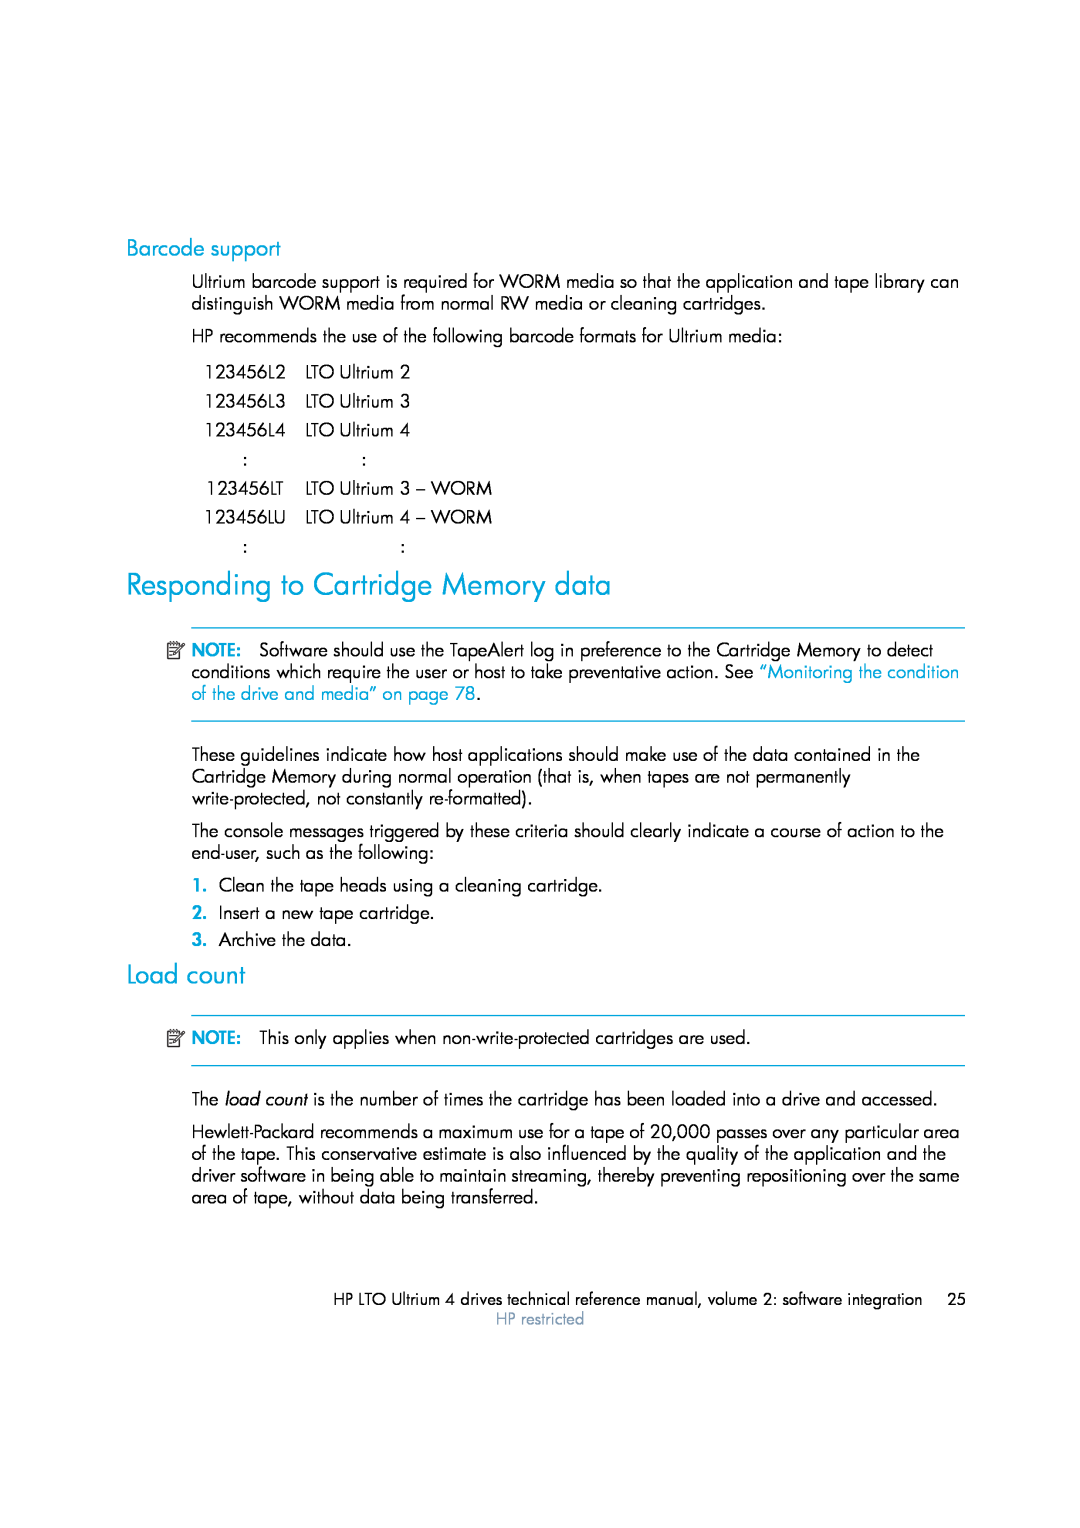 HP LTO 4 SCSI, LTO 4 FC, LTO 4 SAS manual Responding to Cartridge Memory data, Load count, Barcode support 